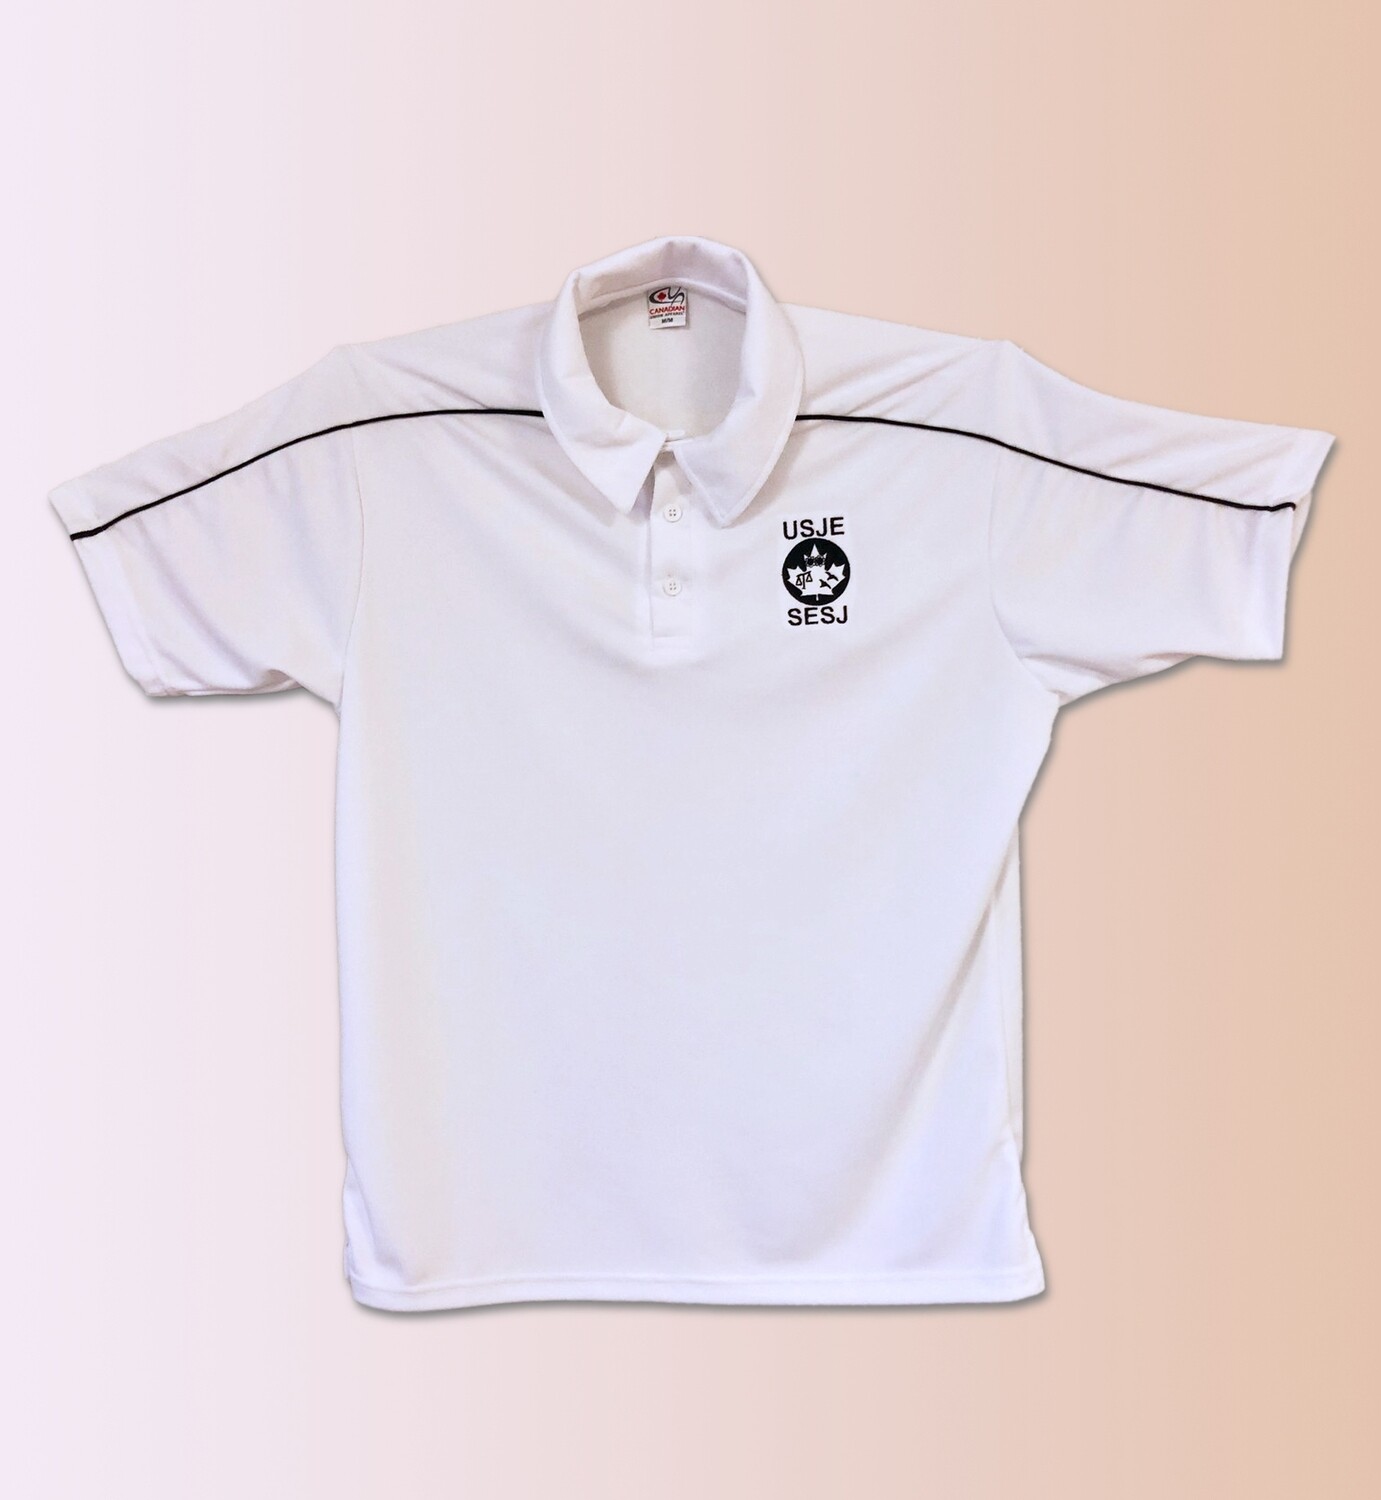 USJE Performance Piqué Polo Shirt (White) (Ladies) / Polo performance en piqué du SESJ (Blanc) (Femme)